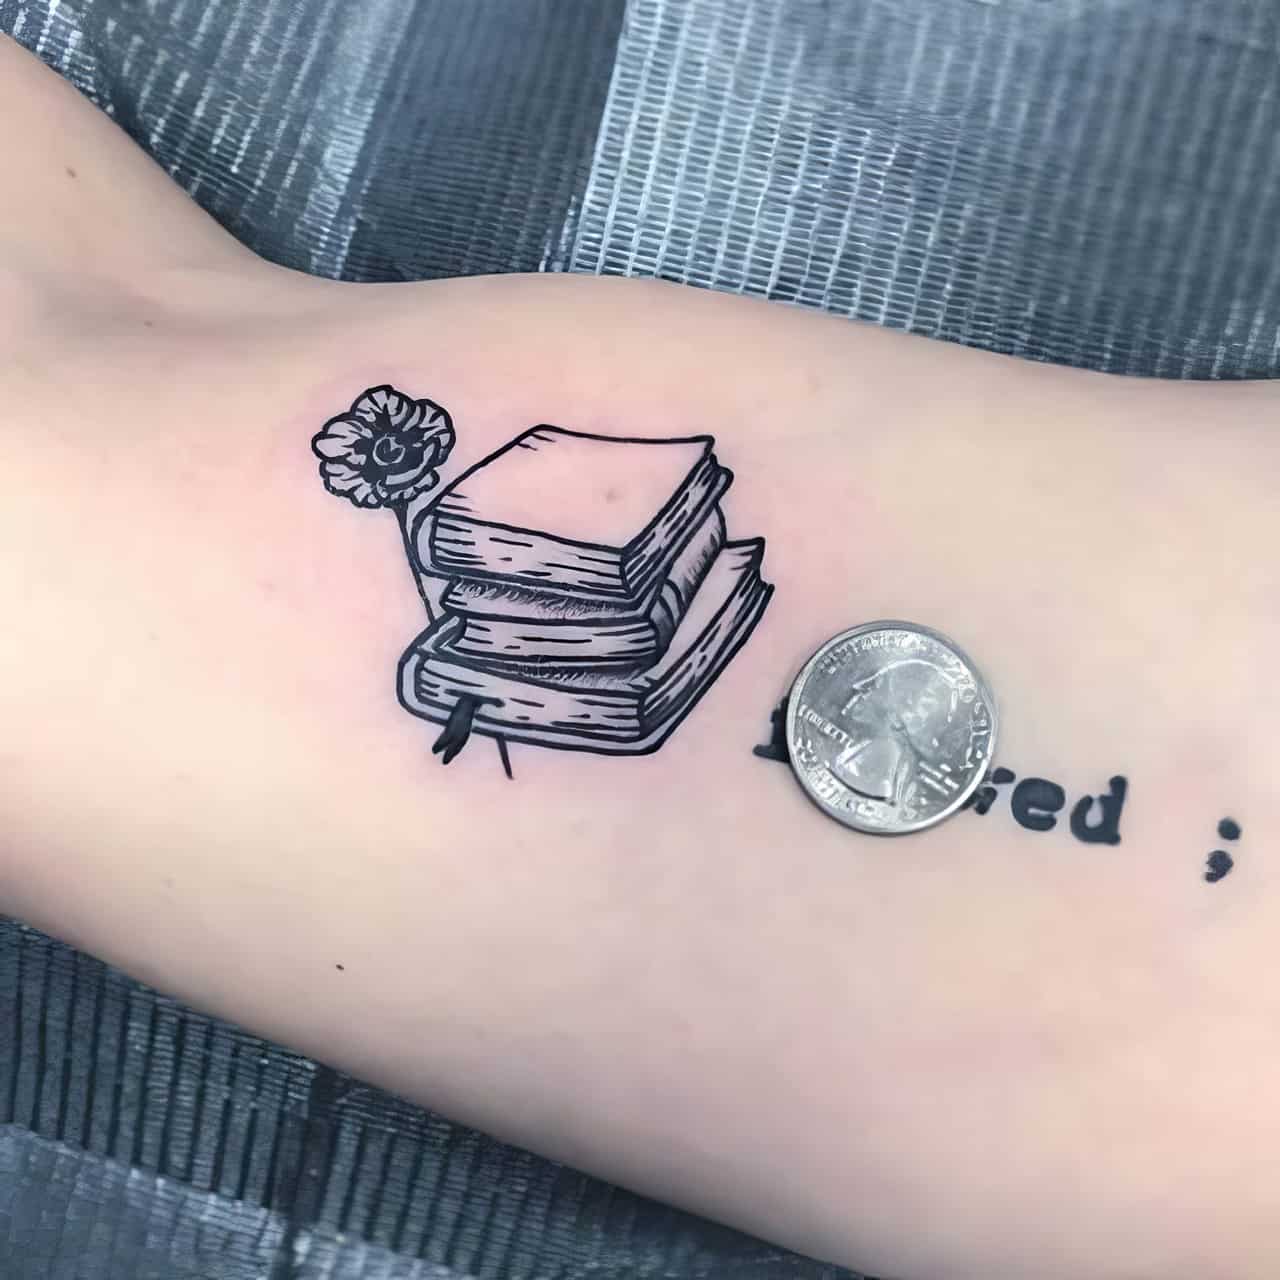 Awe-inspiring Book Tattoos for Literature Lovers - KickAss Things